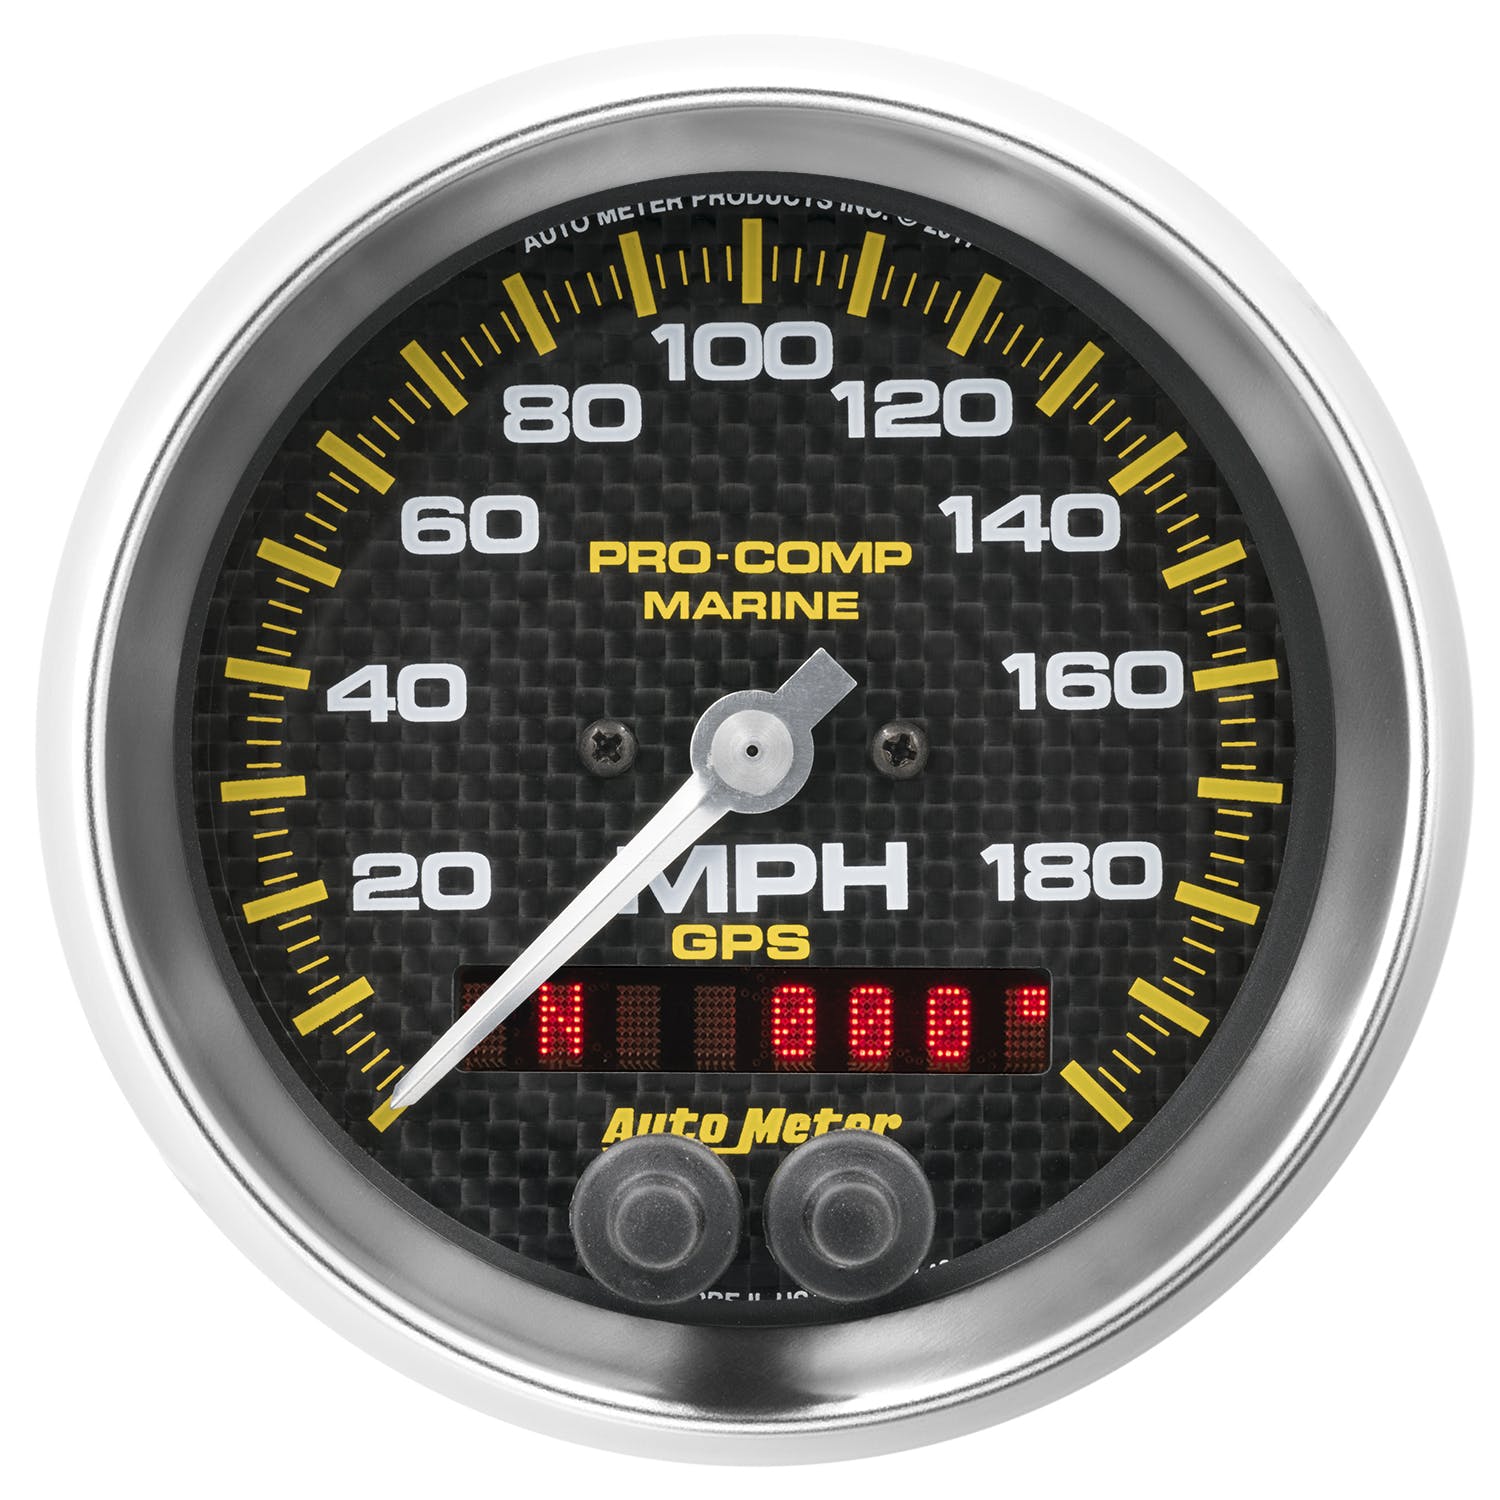 AutoMeter Products 200639-40 Marine Carbon Fiber Speedometer Gauge 3 3/8, 200MPH, GPS